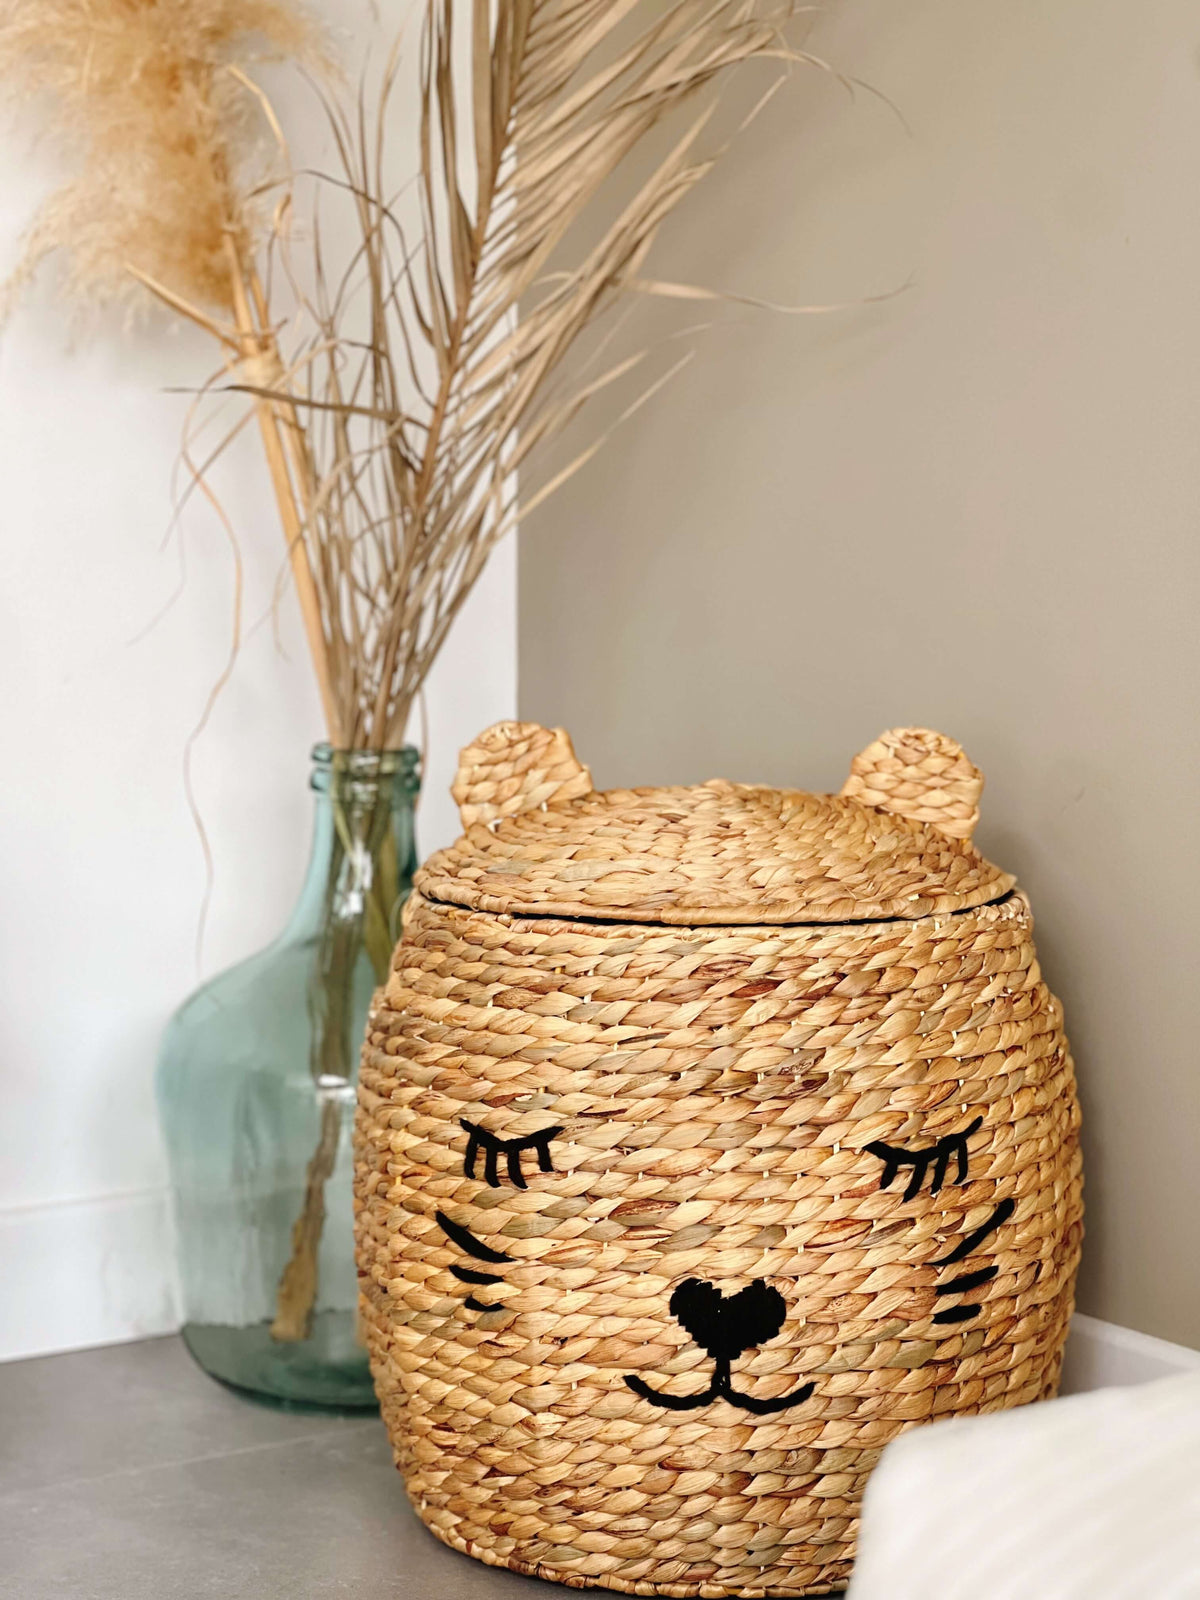 Natural rattan cat basket - Kitty